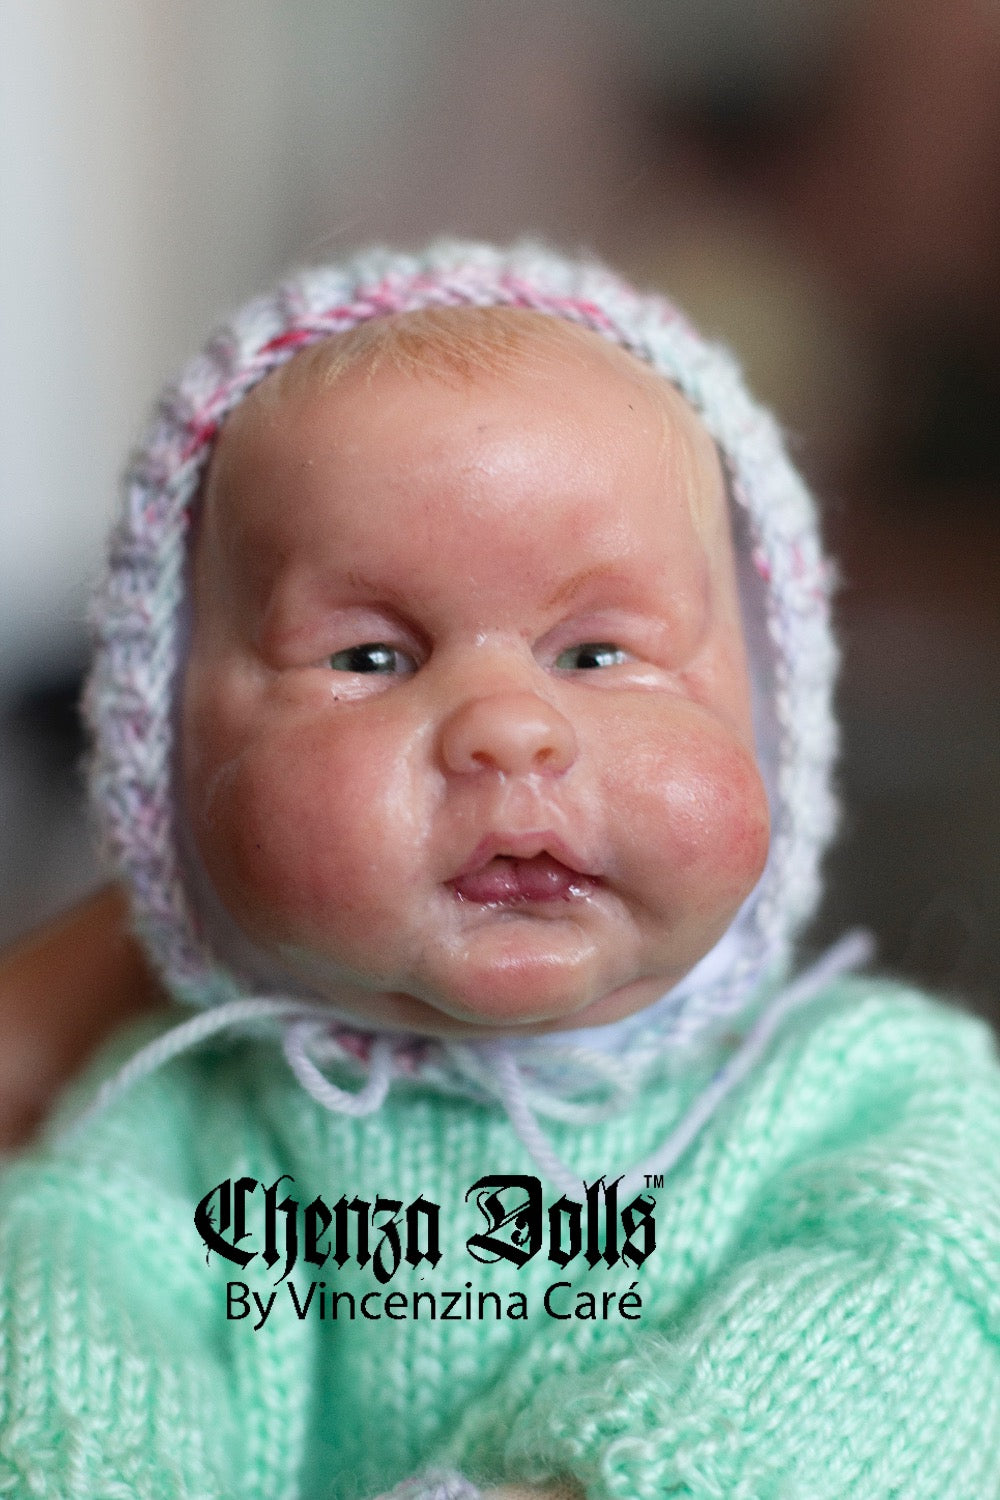 Pascal OOAK Bonnet baby doll